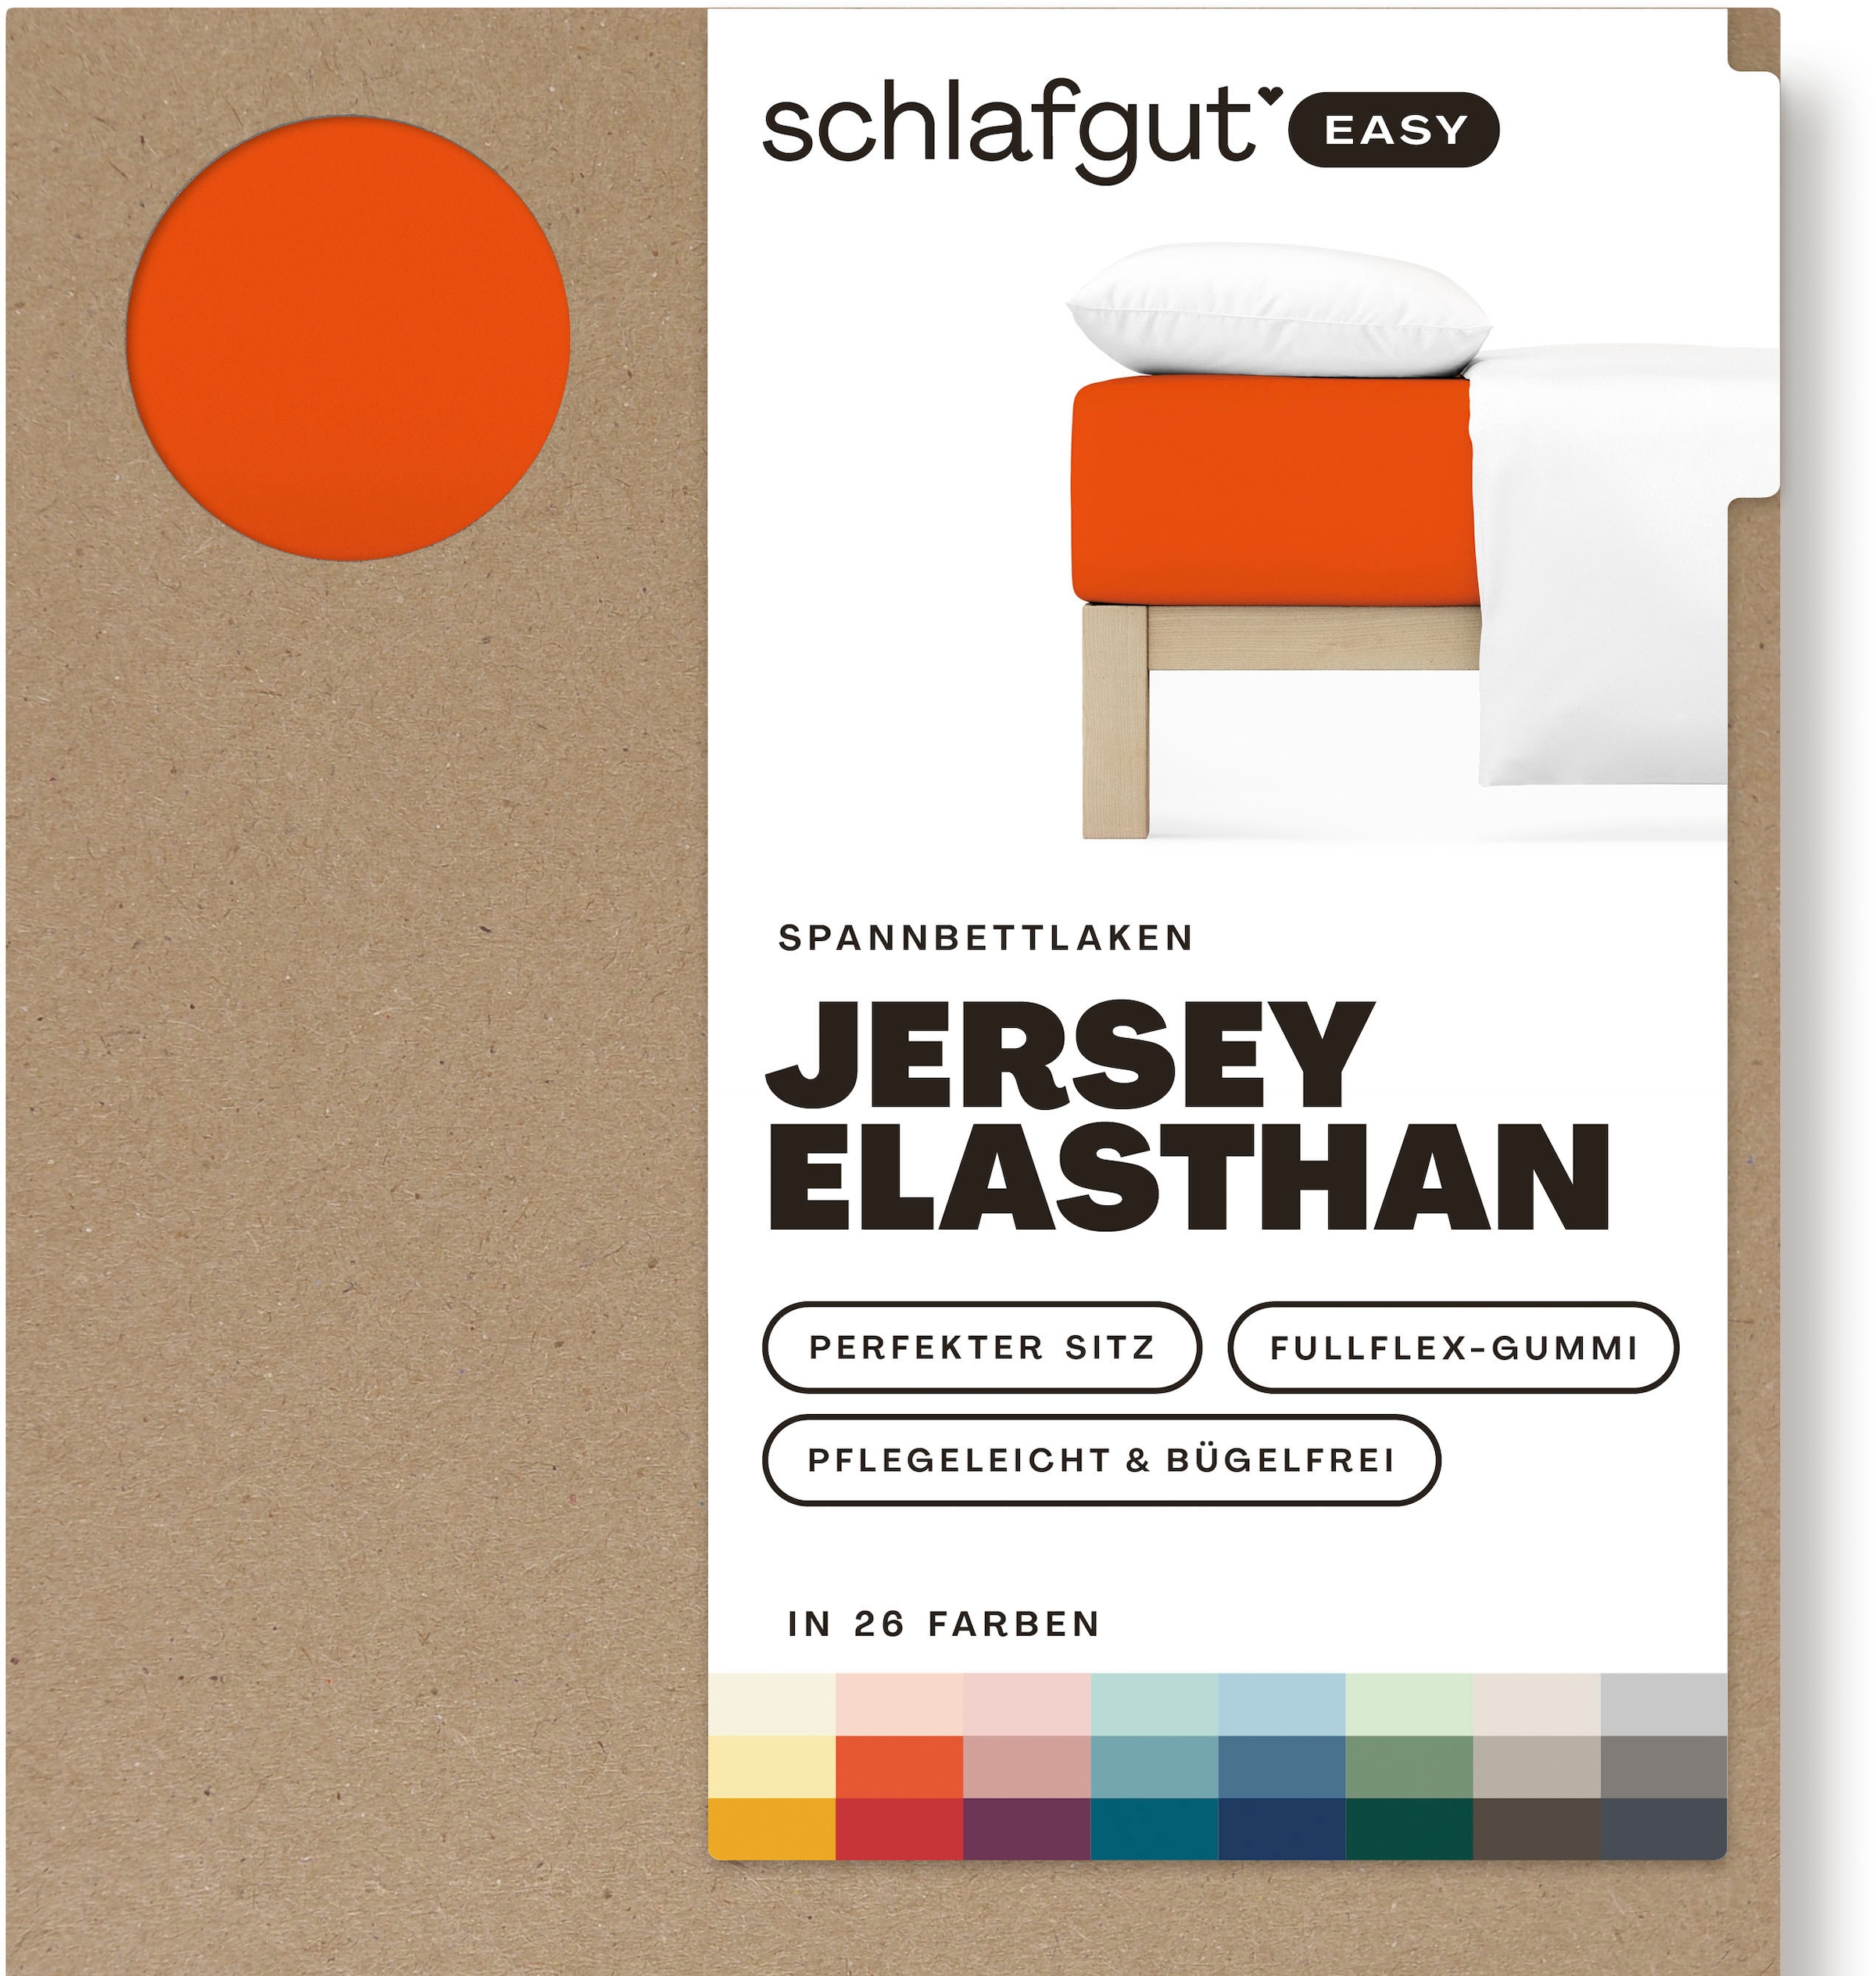 Schlafgut Spannbettlaken "EASY Jersey Elasthan", MADE IN GREEN by OEKO-TEX